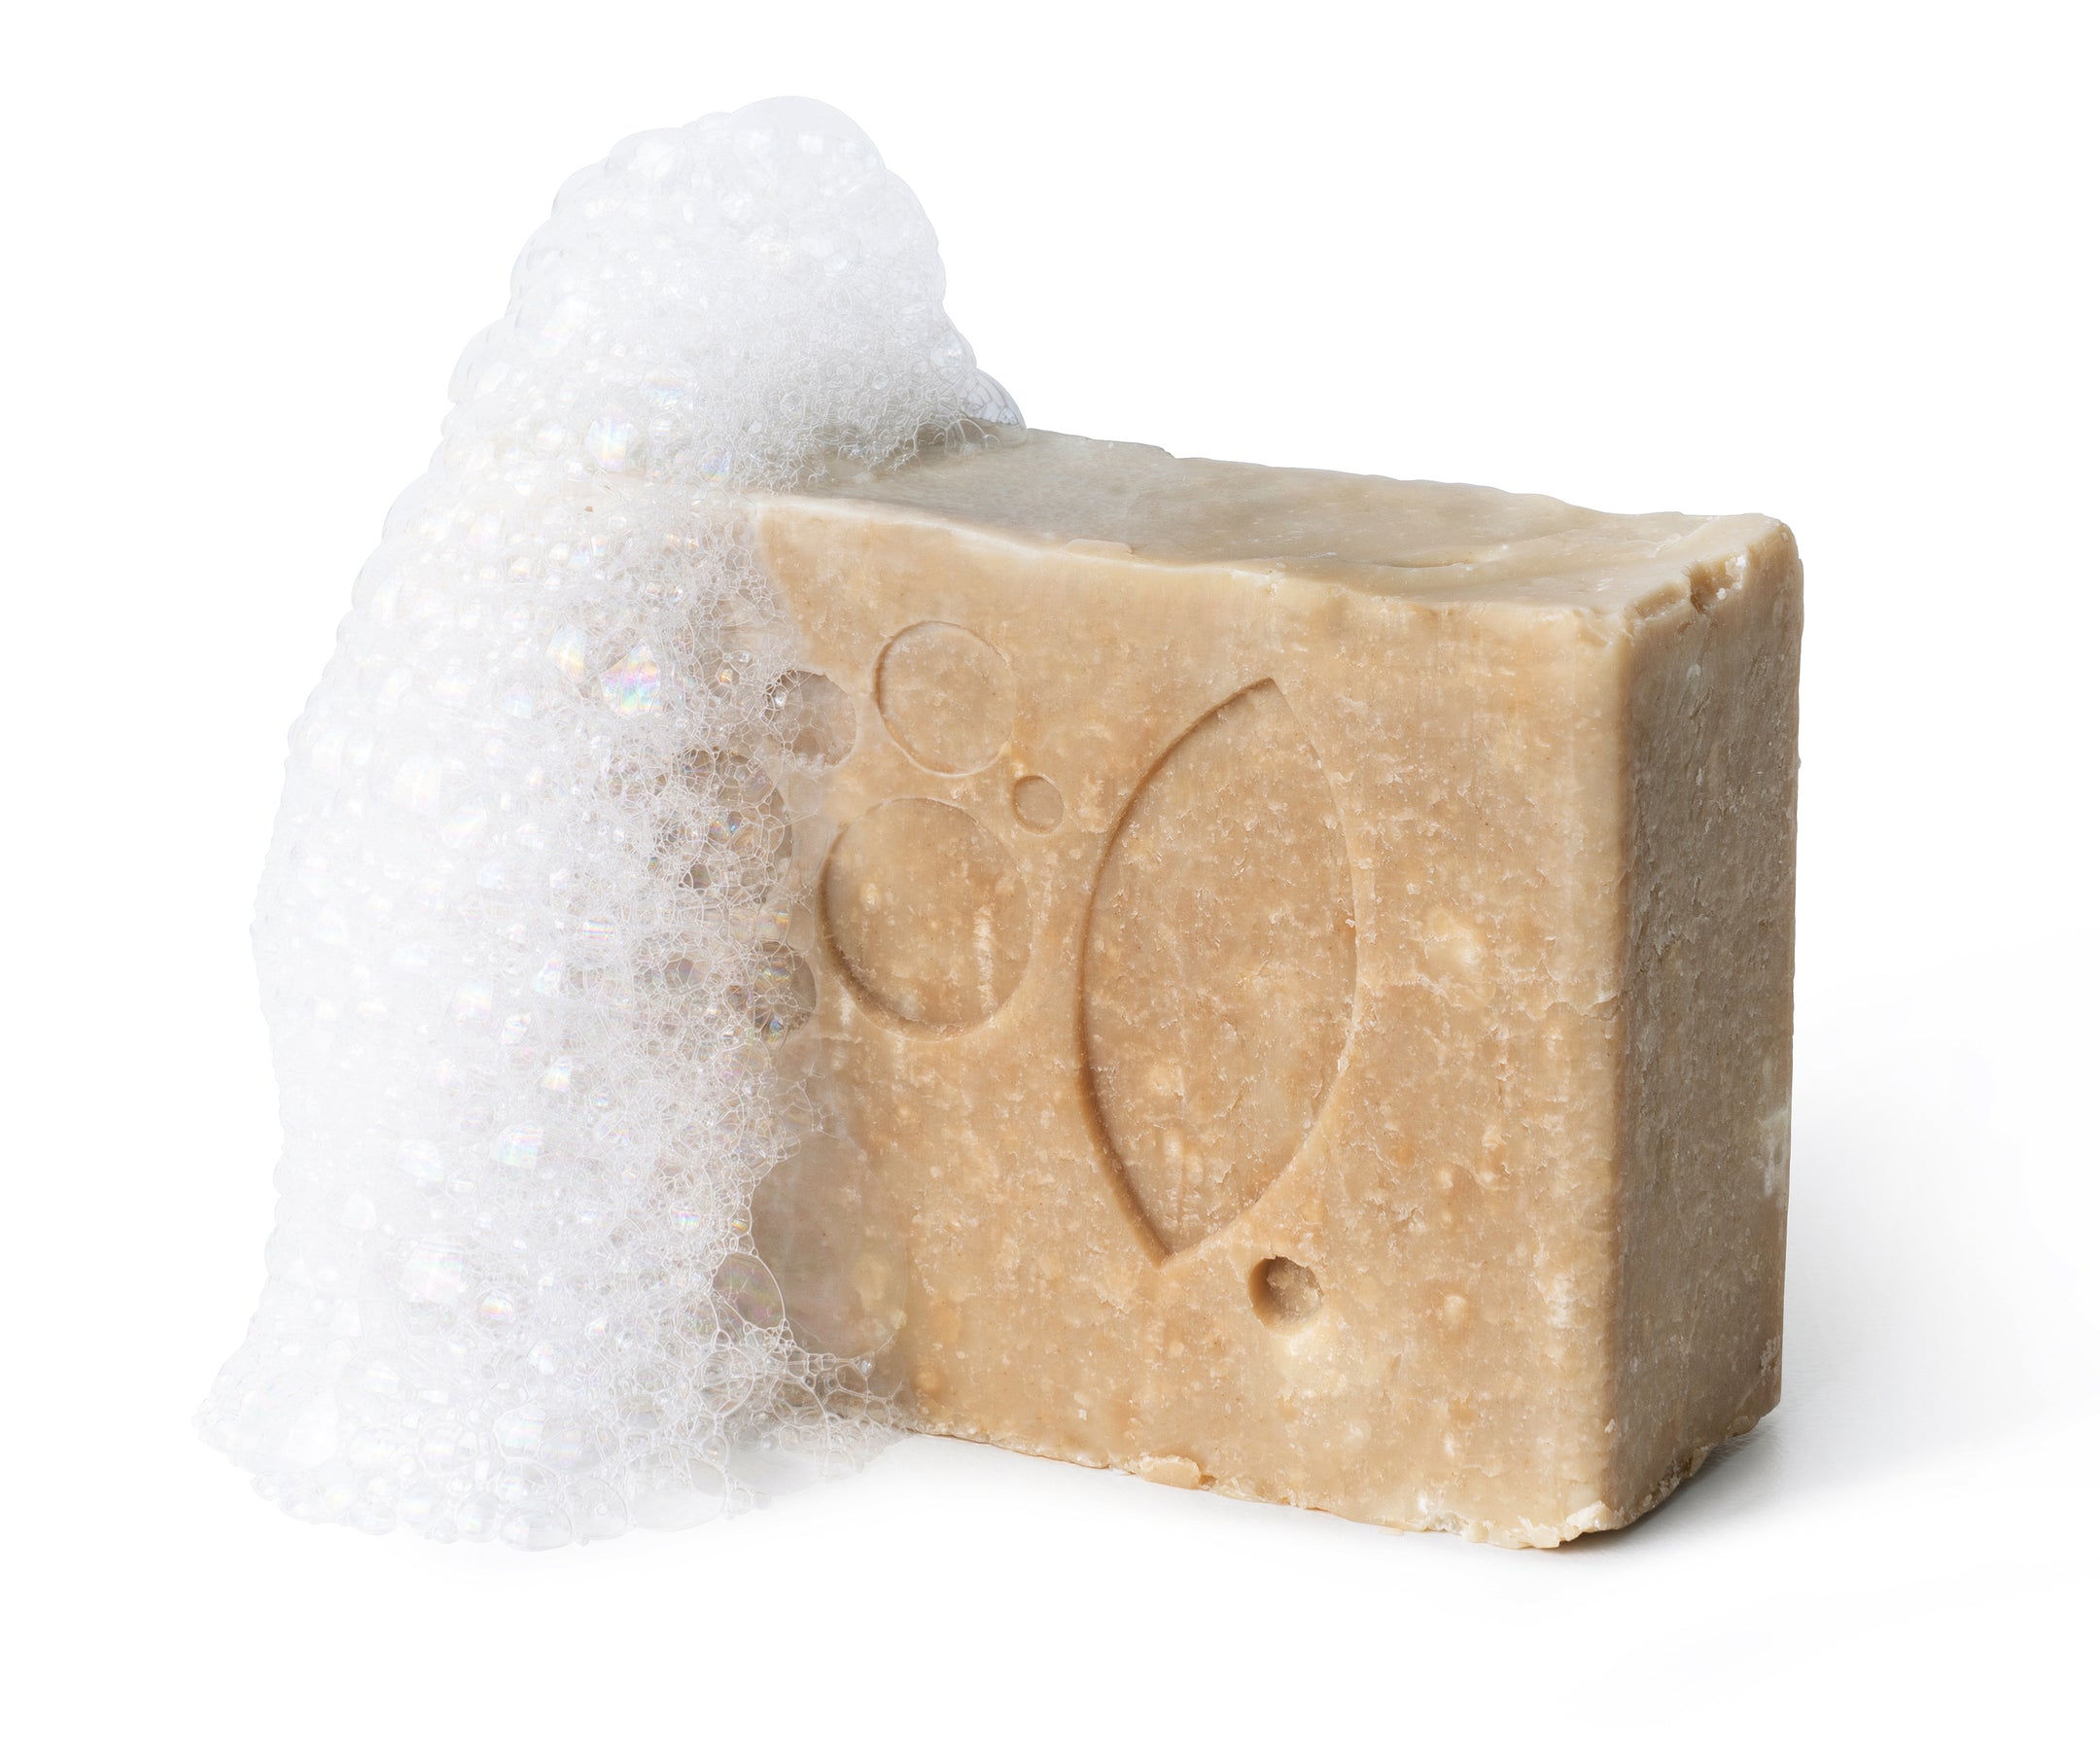 Australian Natural Soap Company Dry Skin Face Cleanser Bar